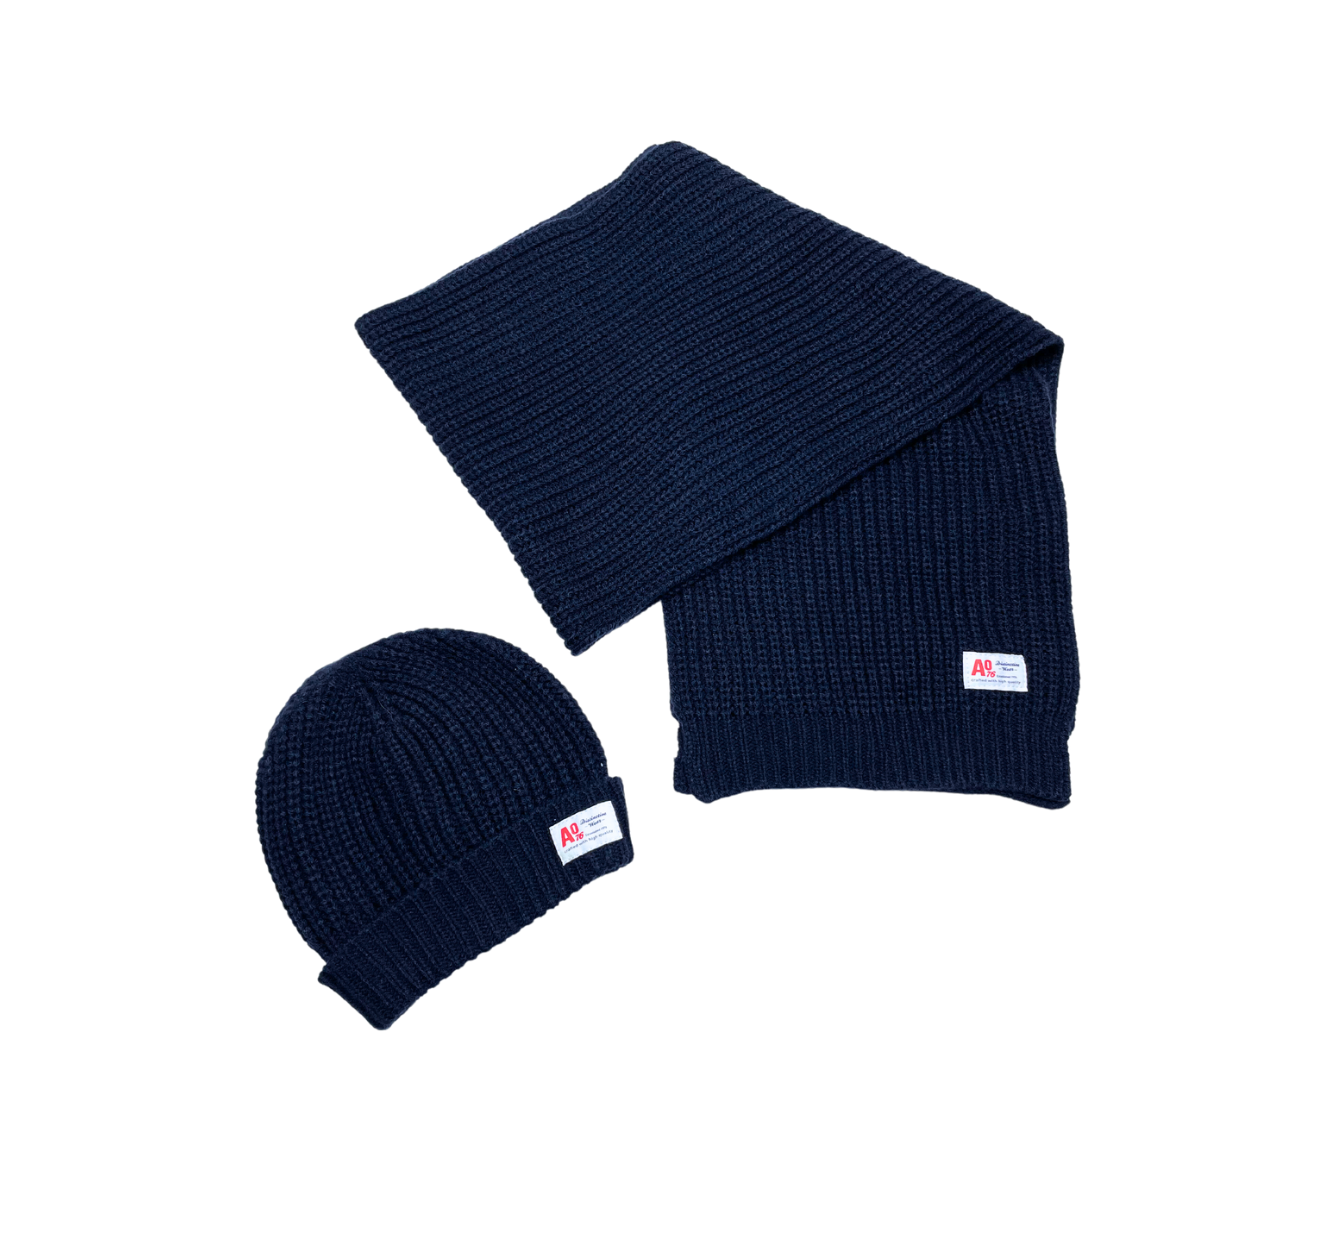 AO76 - Ensemble bonnet écharpe bleu marine - 1 an